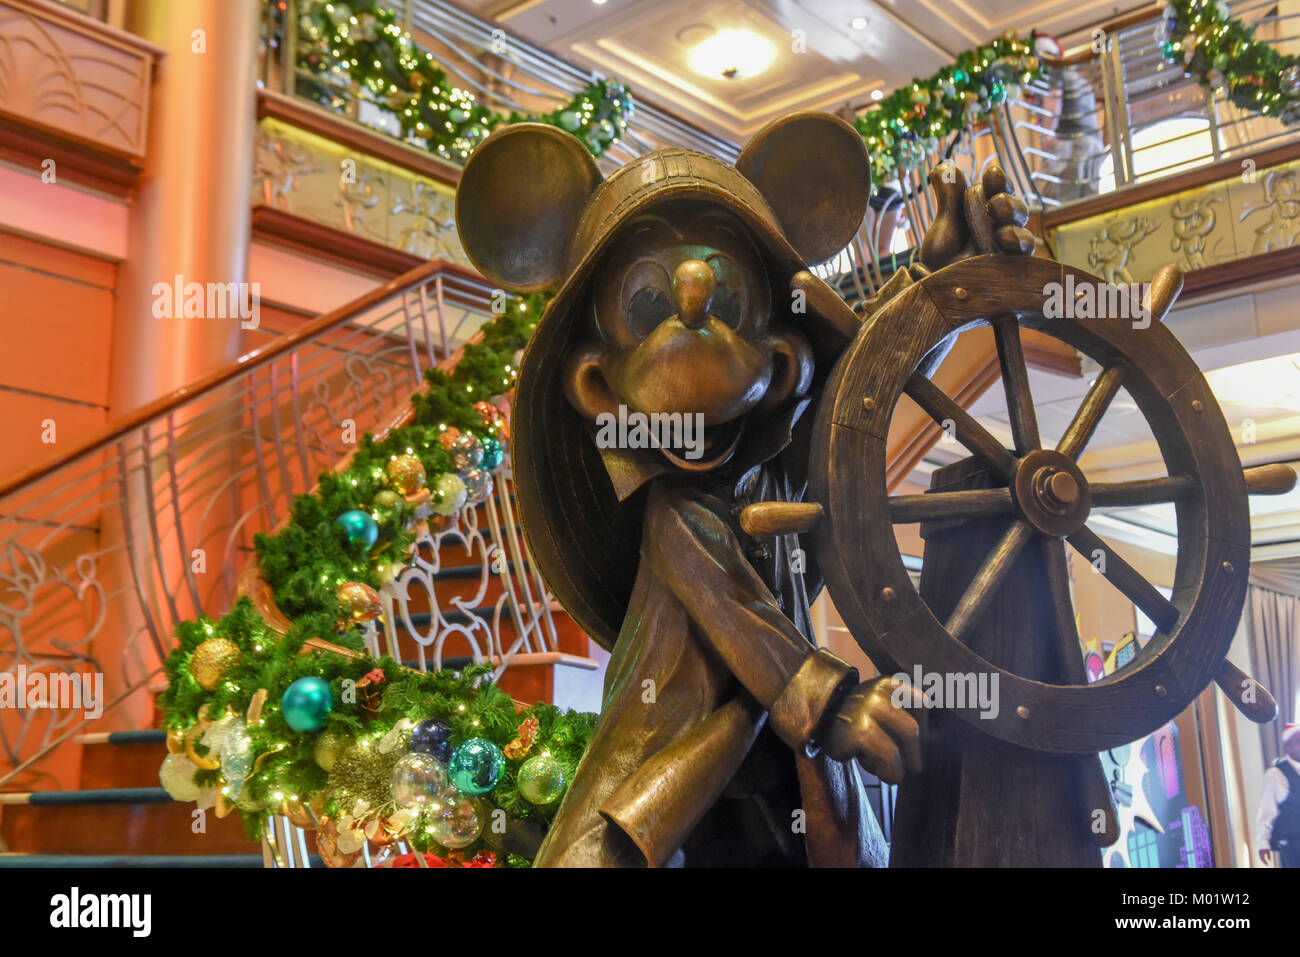 Disney Cruise Ship - Disney Magic - vacanza ai Caraibi / Natale crociera  alle Bahamas - Mickey Mouse su Disney Cruise Line Foto stock - Alamy